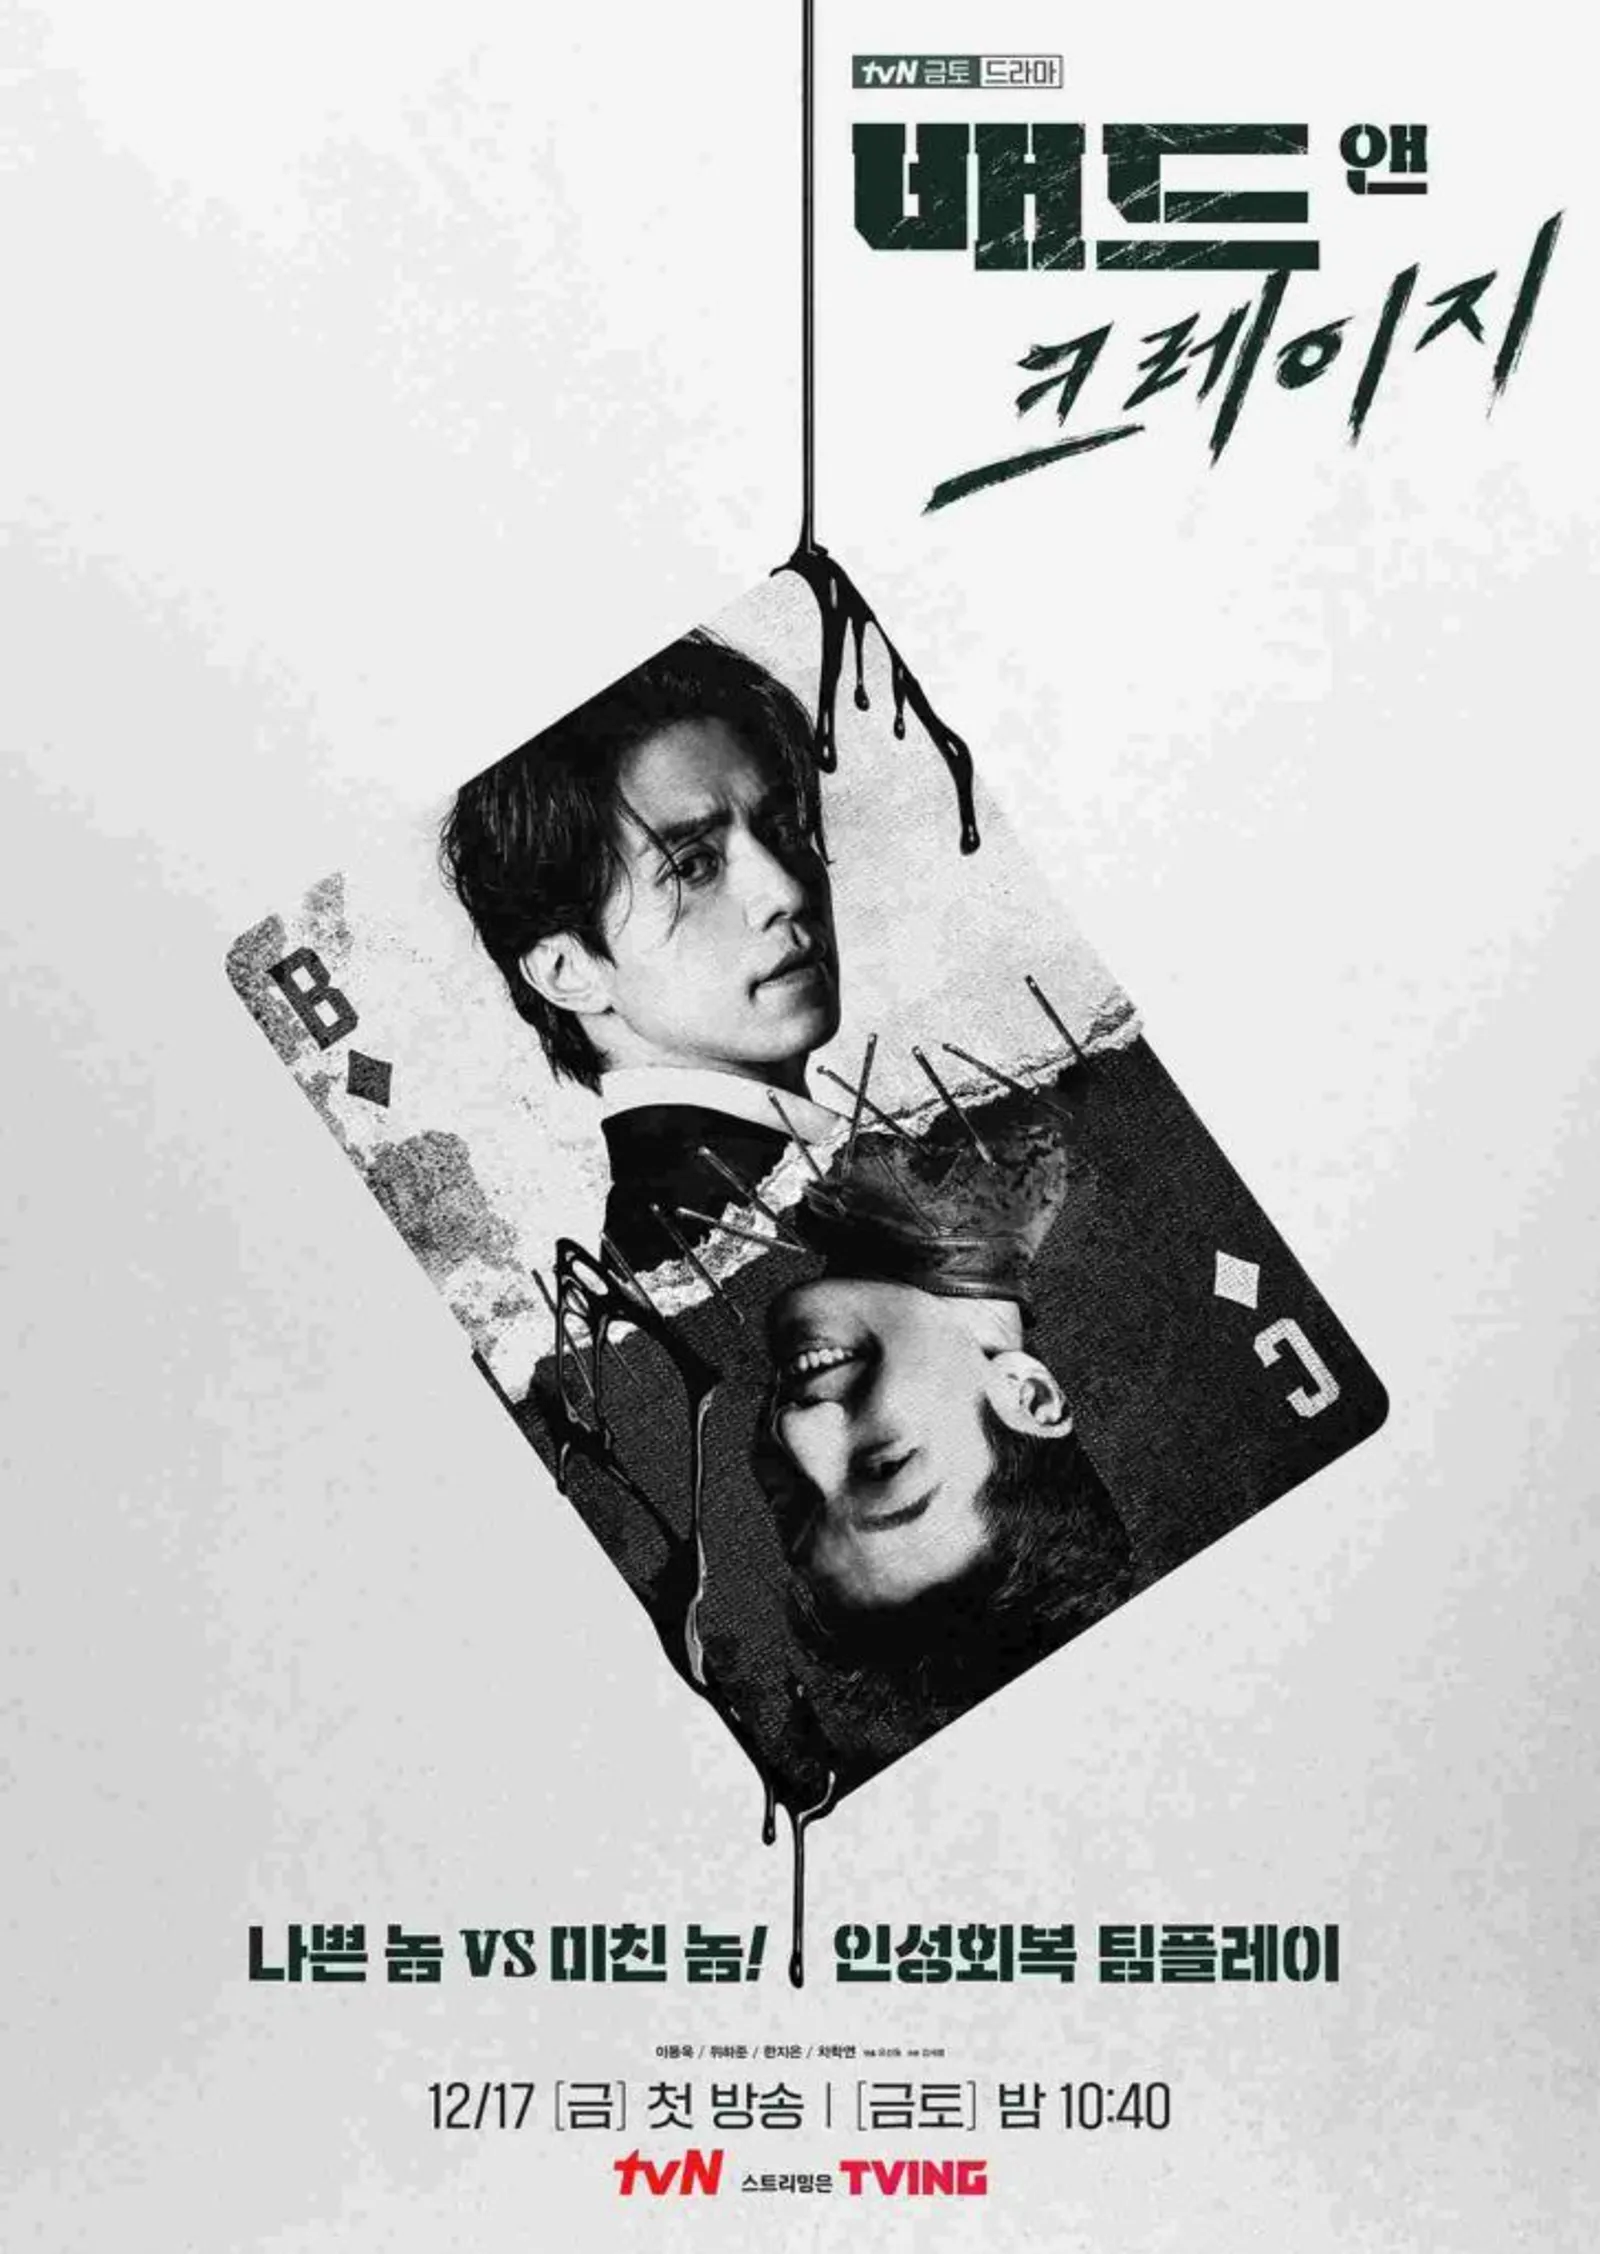 Ada 'Snowdrop', Ini 10 Drama Korea Desember 2021 yang Paling Dinanti